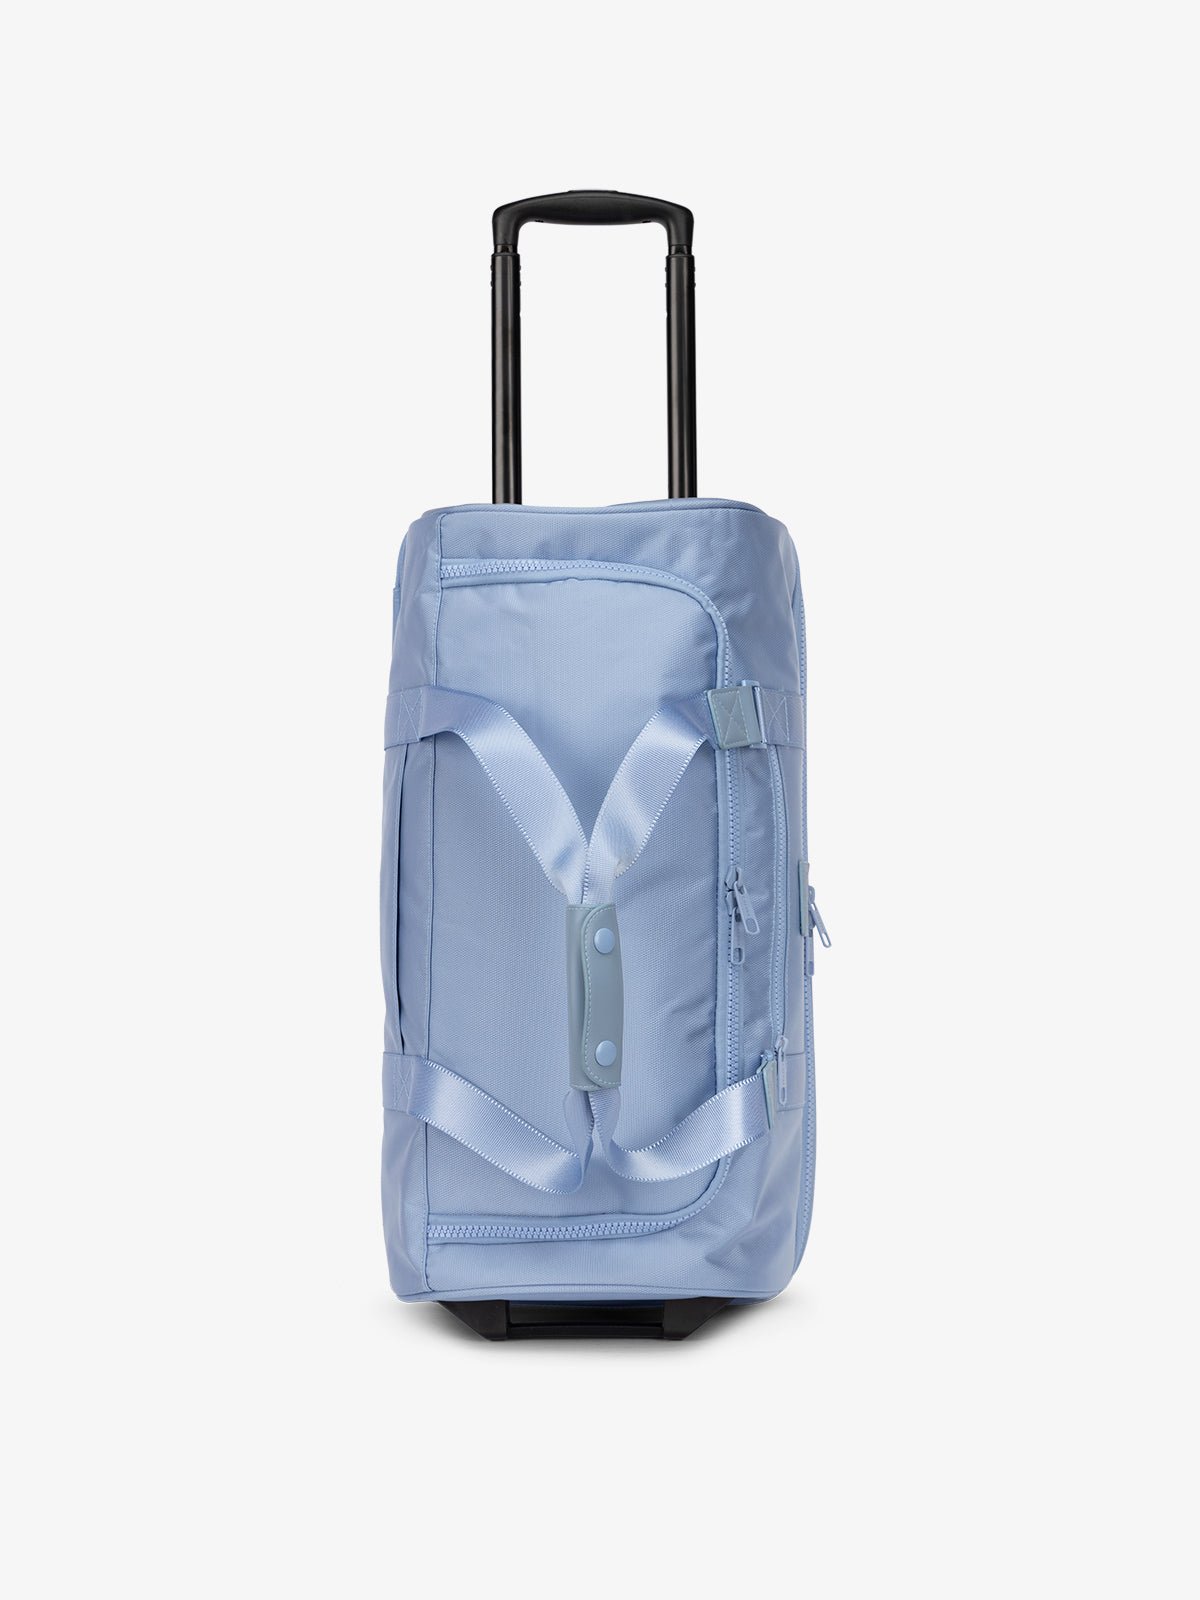 CALPAK Stevyn Rolling Duffle carry-on 22-inch bag in light blue